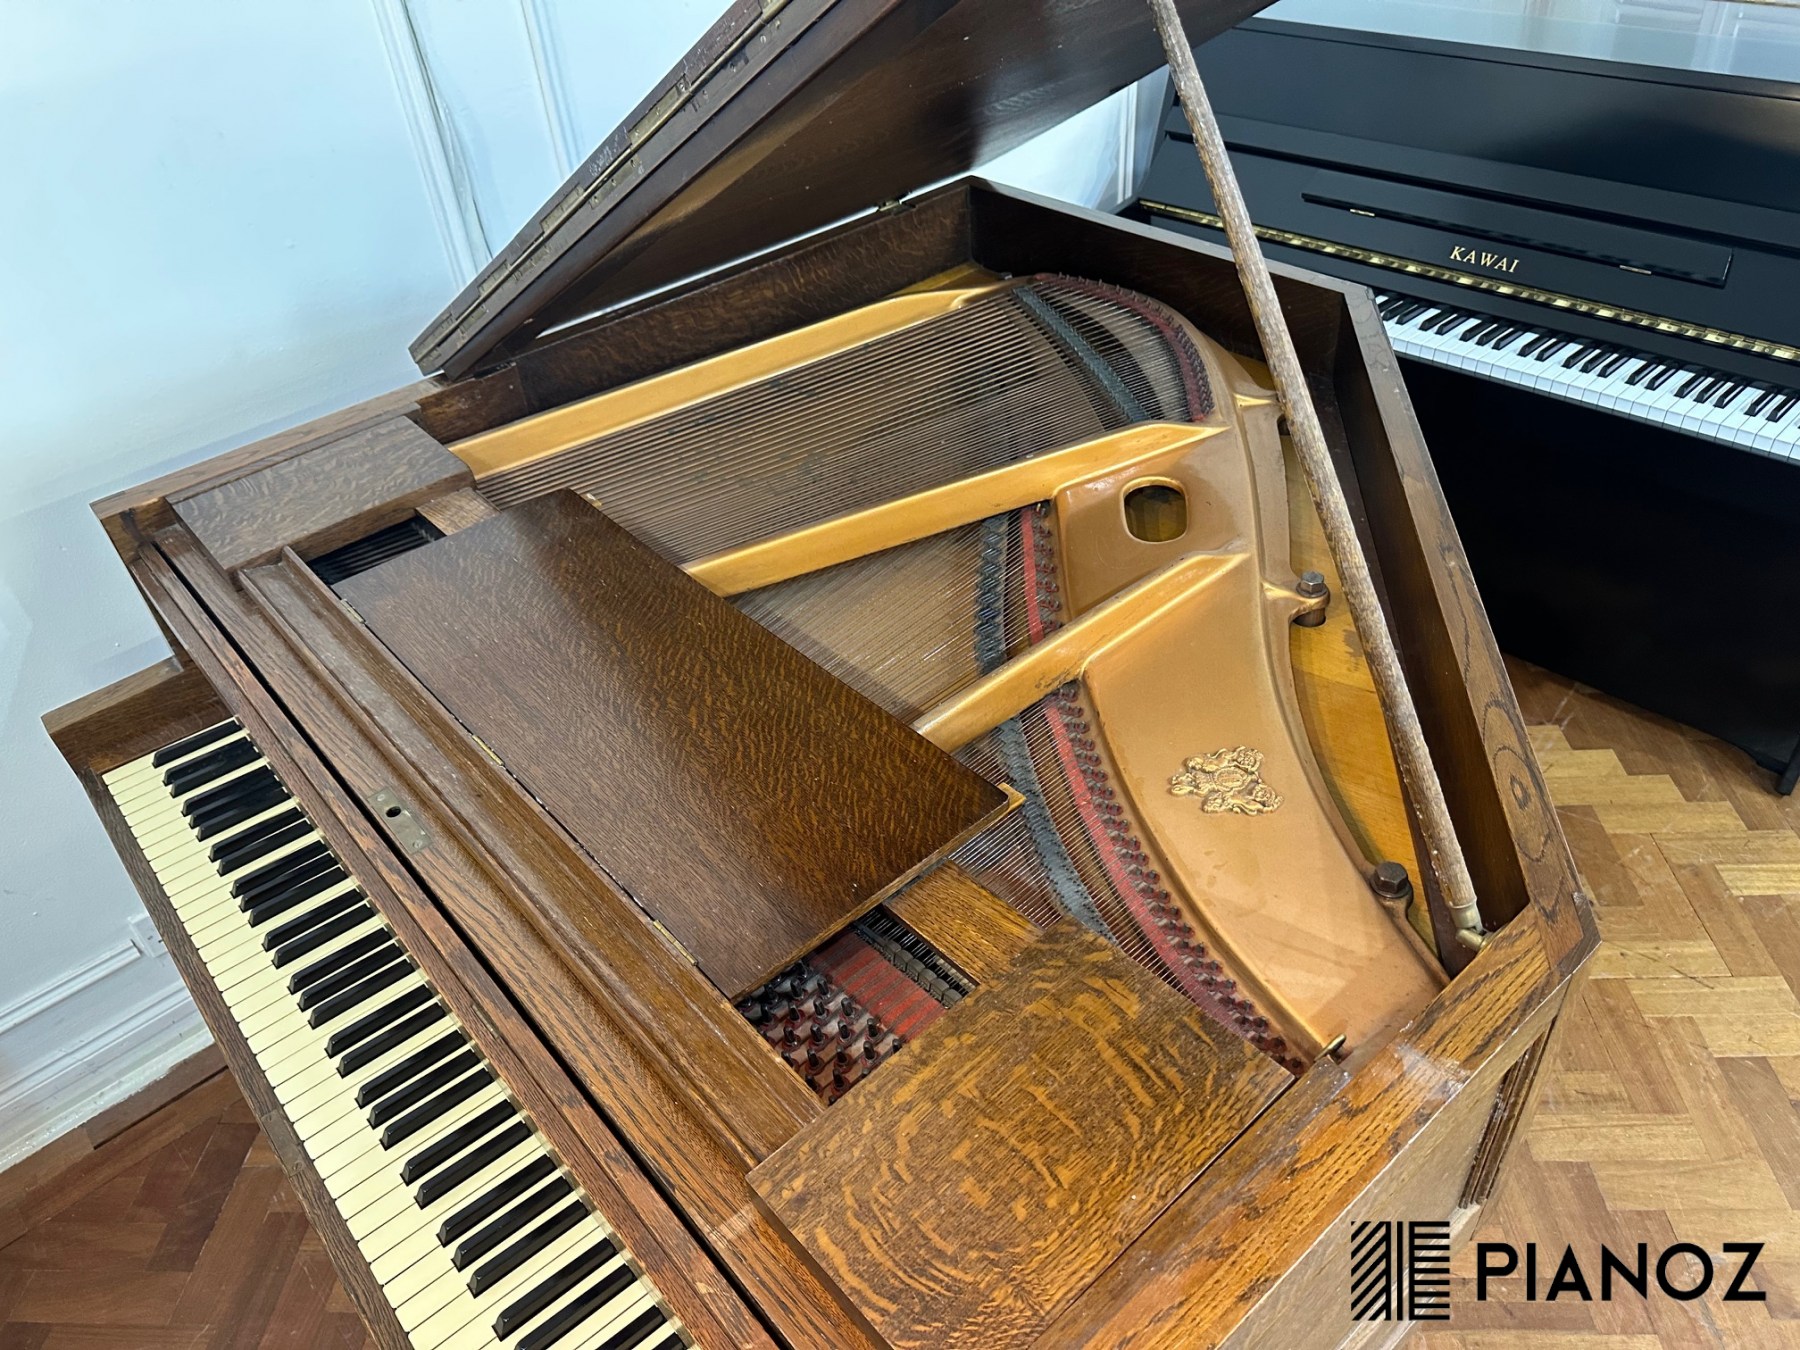 Broadwood Lutyens Baby Grand Piano piano for sale in UK